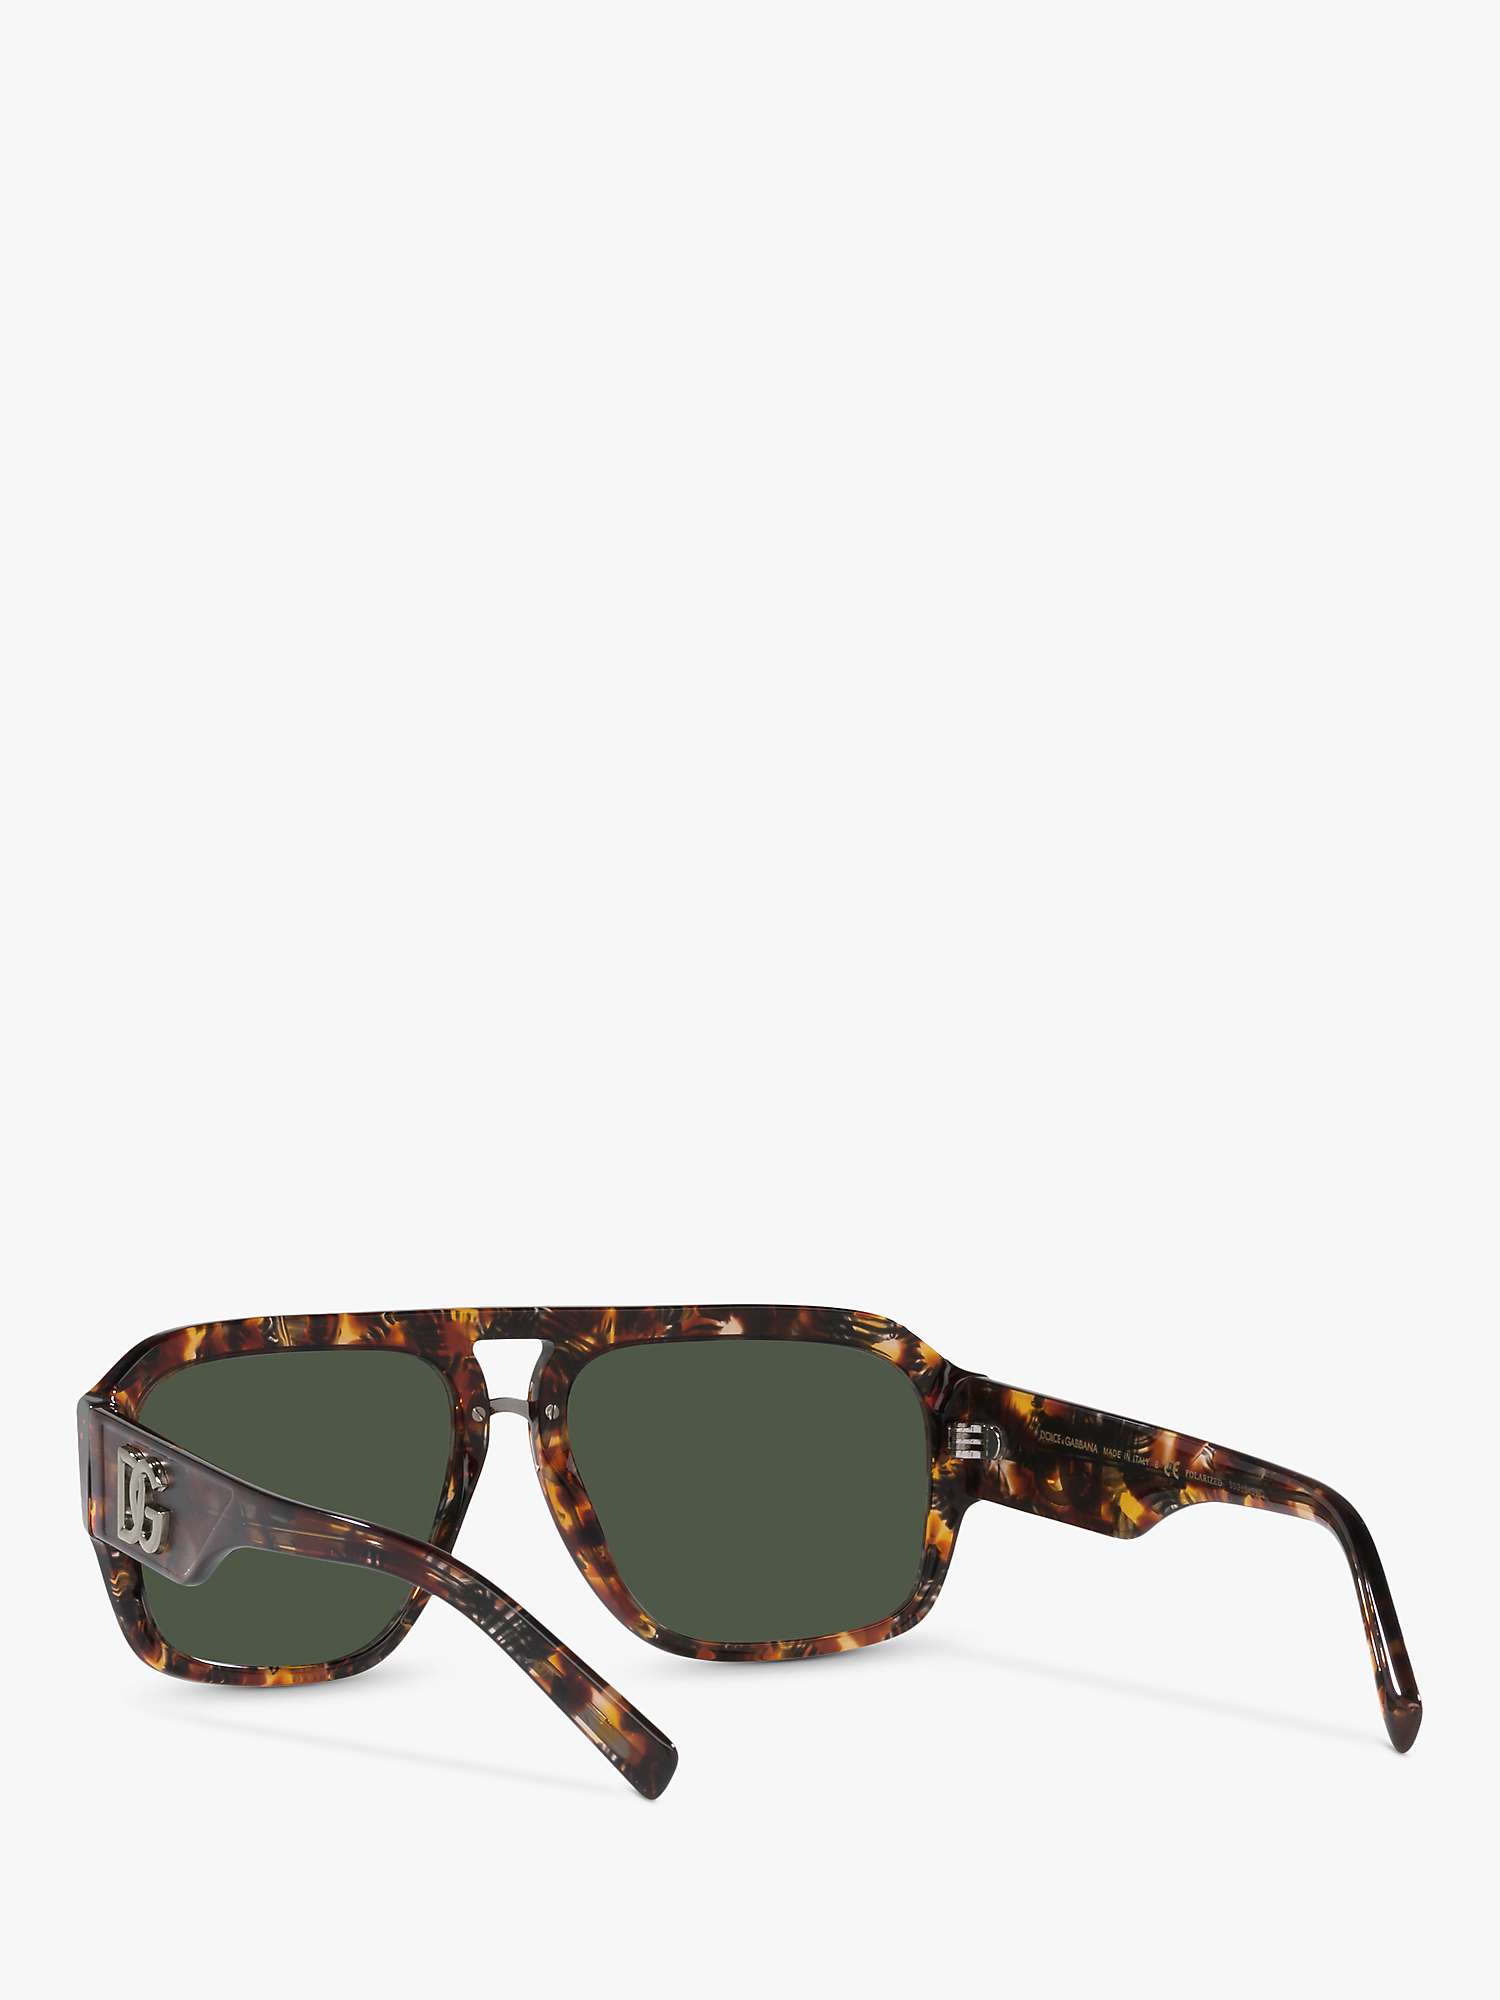 Buy Dolce & Gabbana DG4403 Men's Polarised Aviator Sunglasses, Red Havana/Grey Online at johnlewis.com